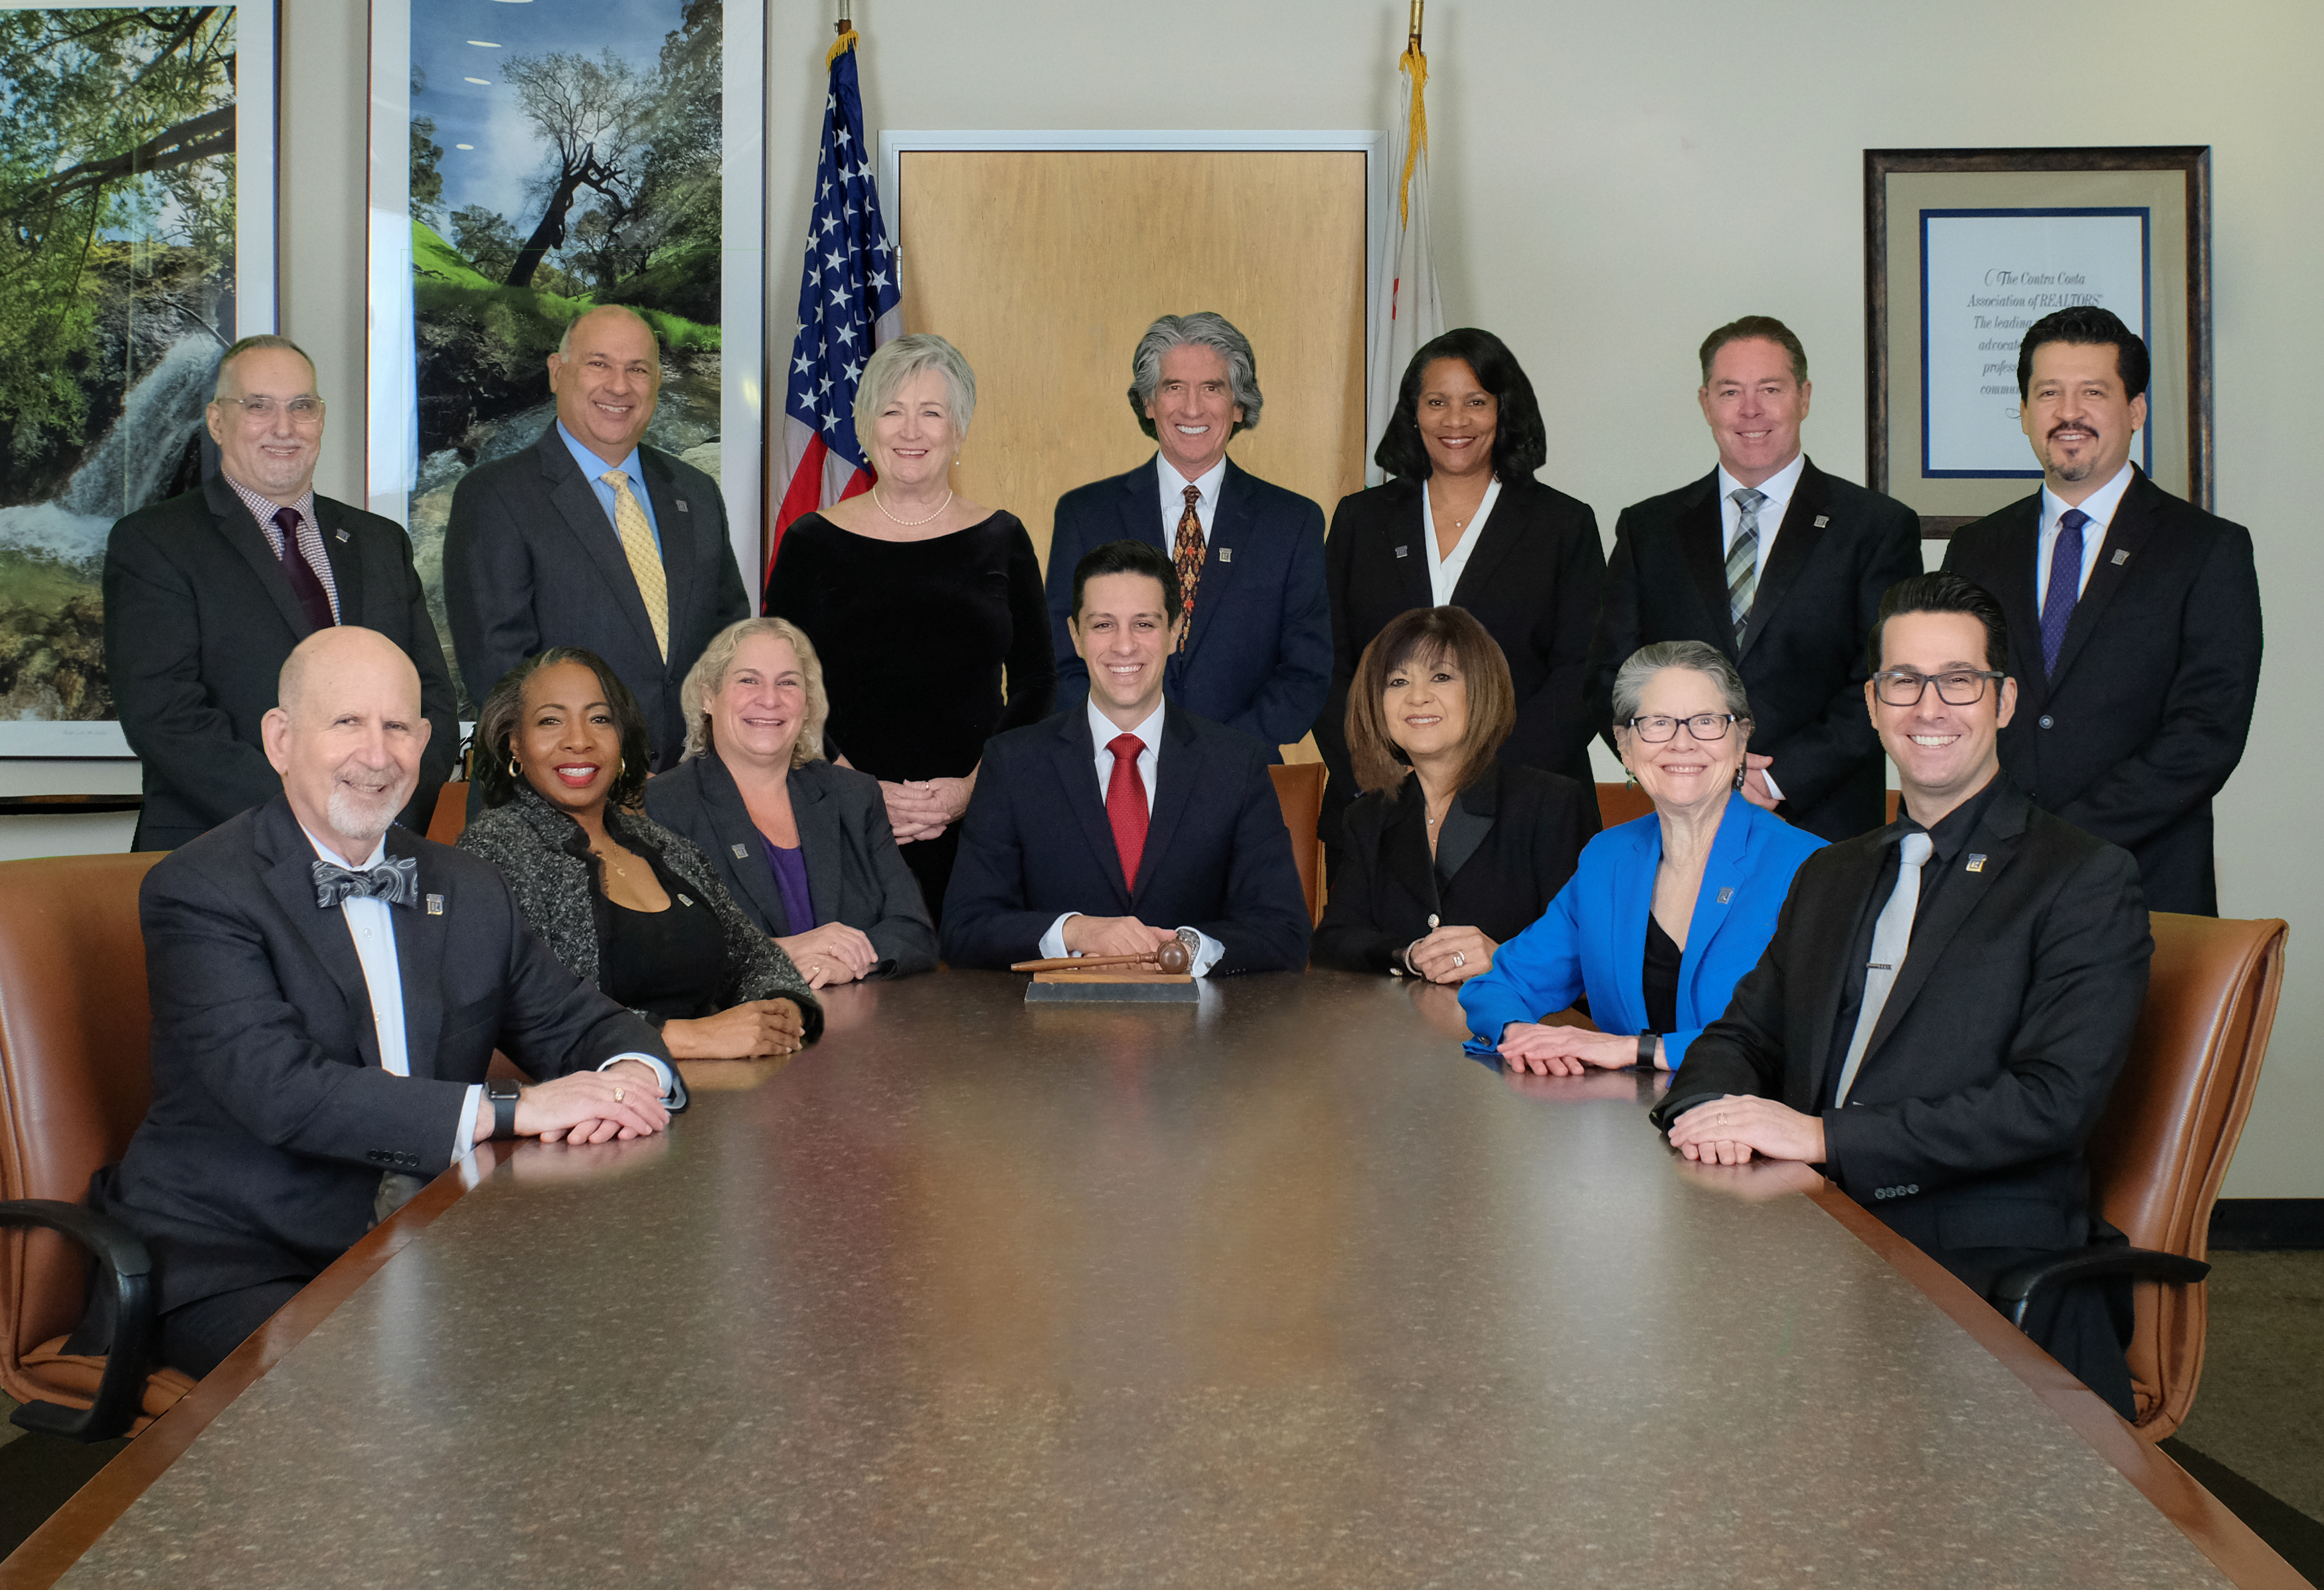 2021 CCAR Board of Directors group photo